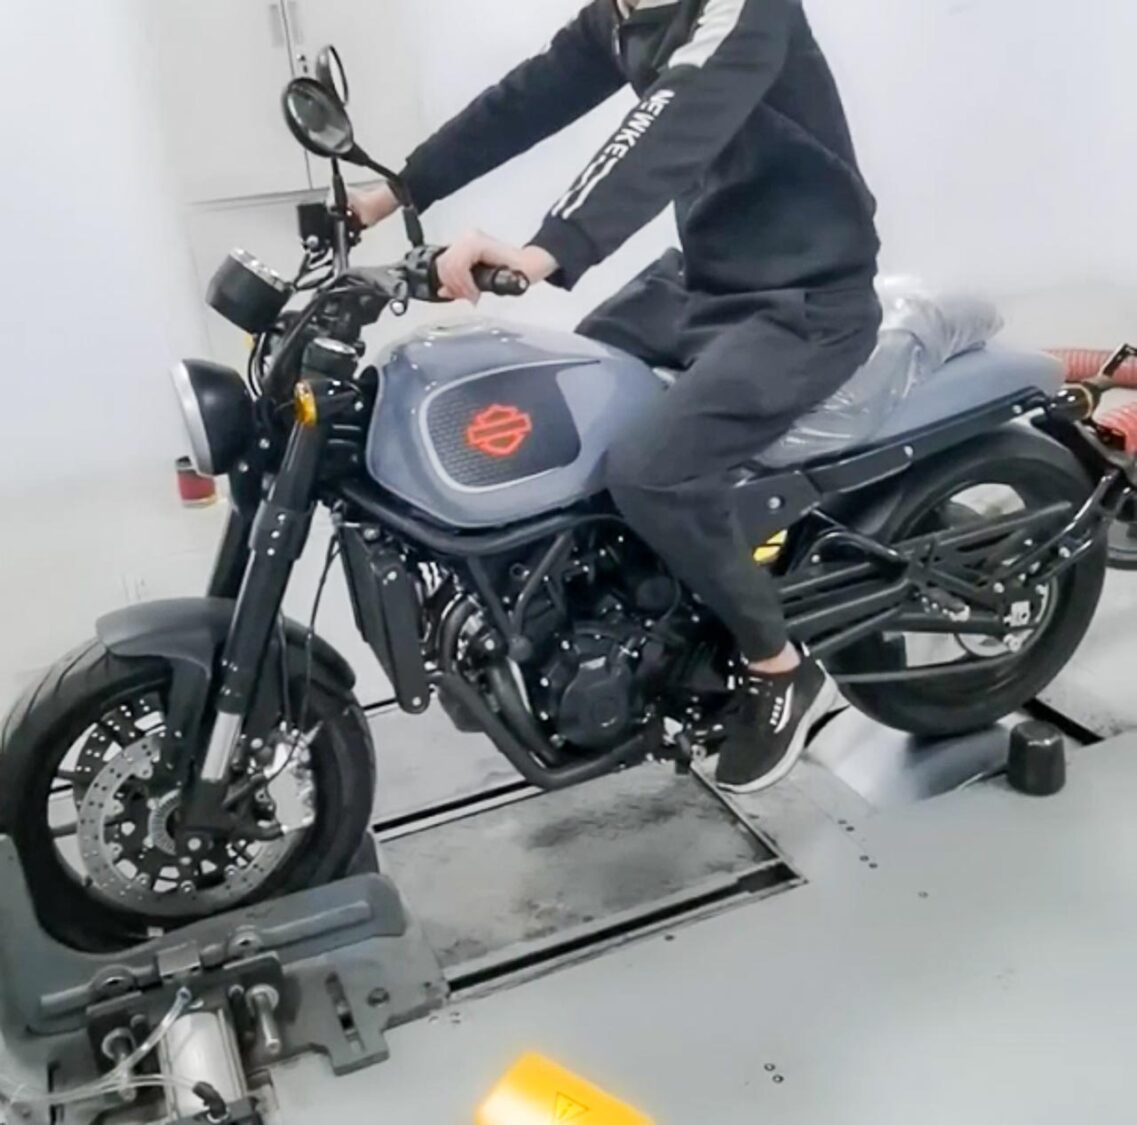 New Harley Davidson 500cc Motorcycle